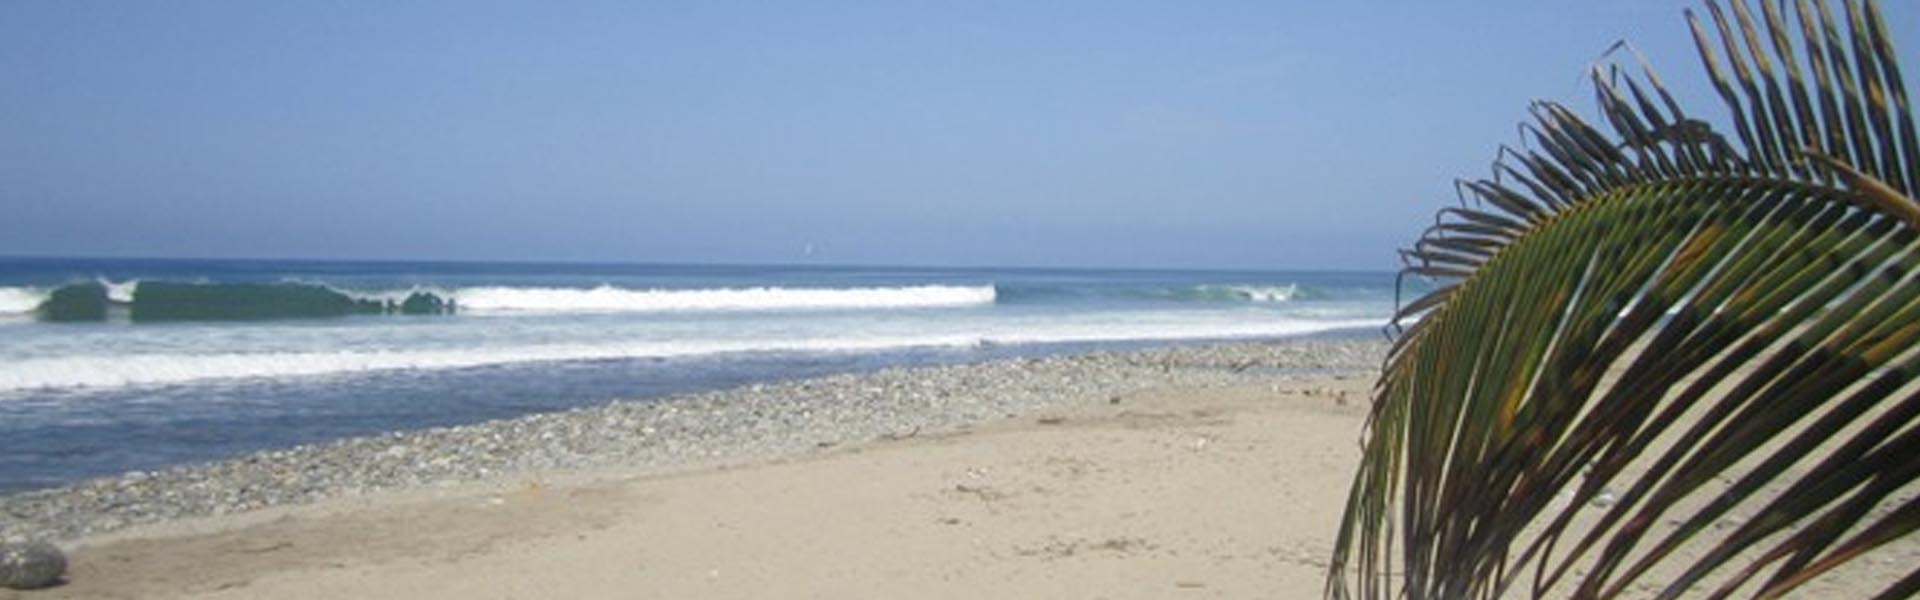 Surf en Playa Quimixto | Playa Quimixto Surf Tour